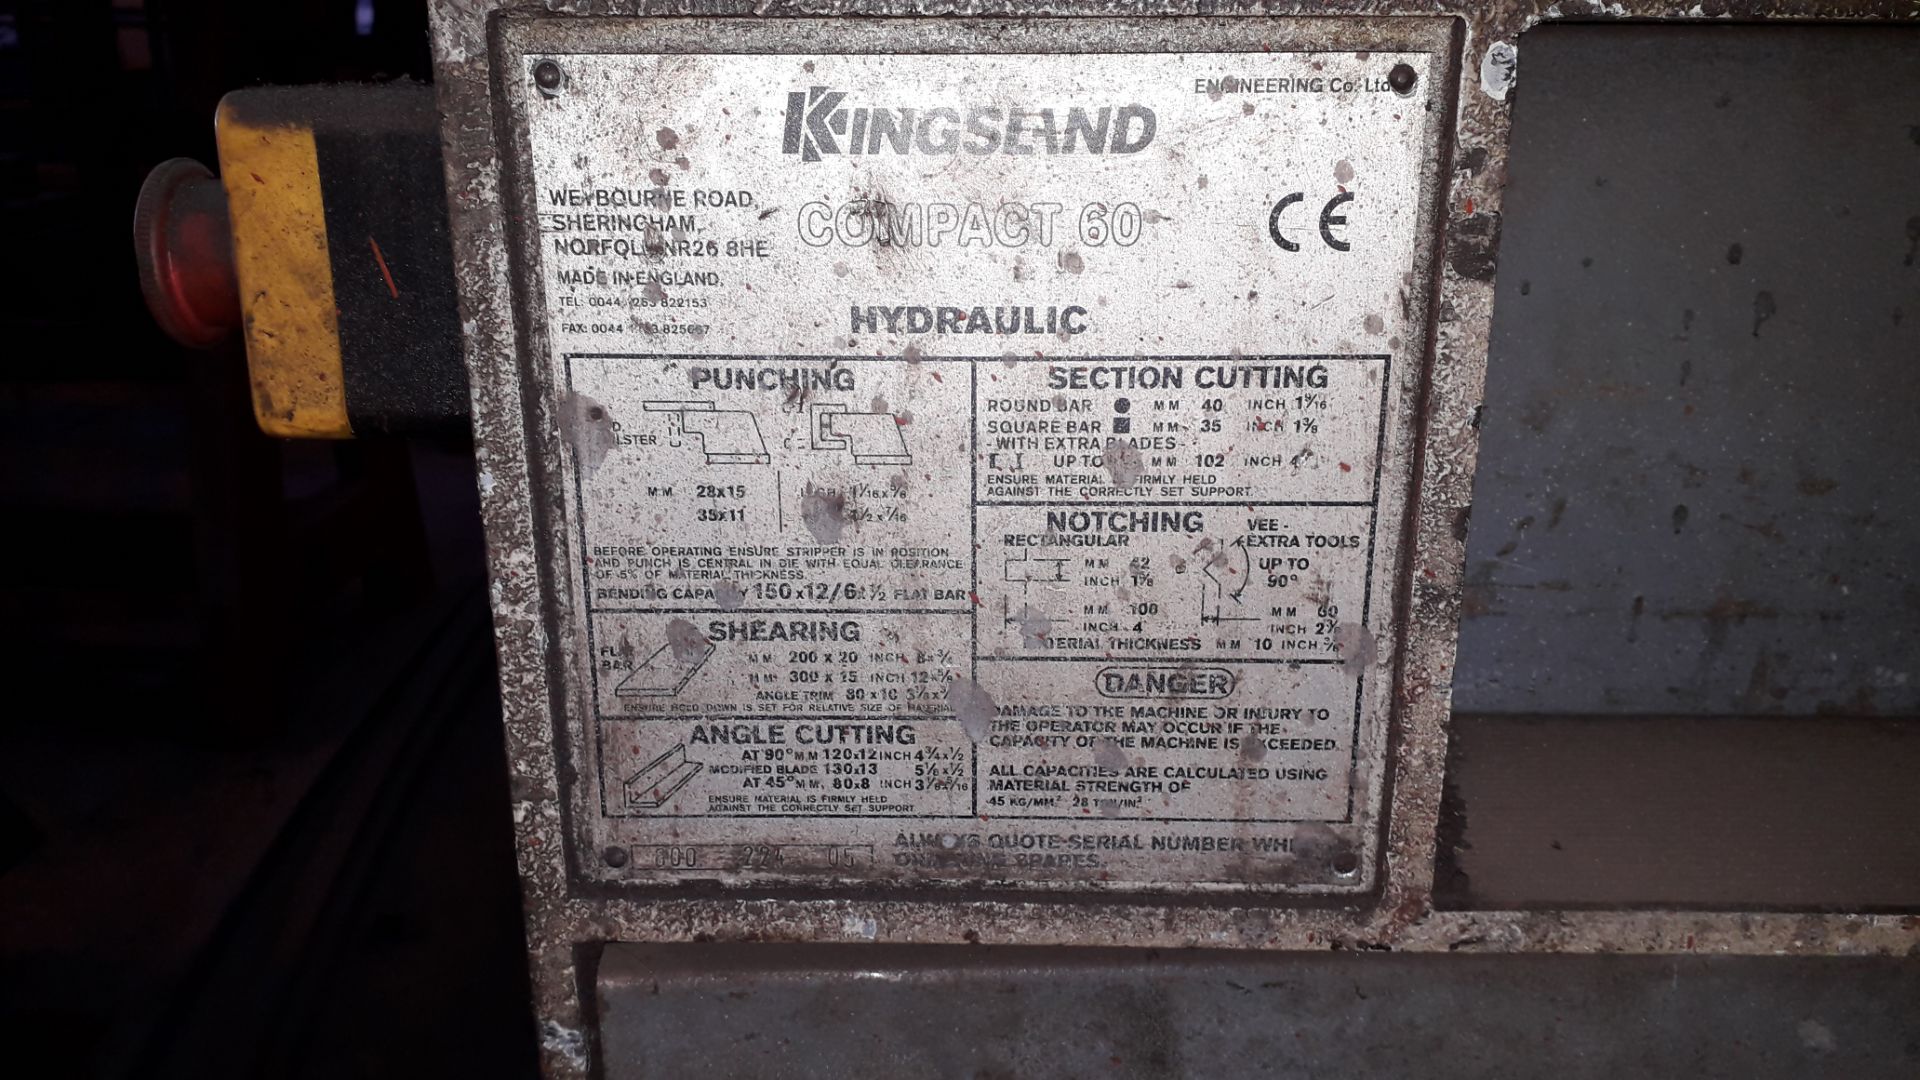 Kingsland Compact 60 Hydraulic Punching, Shearing, Cutting & Notching Machine, Serial Number 600-224 - Image 4 of 4